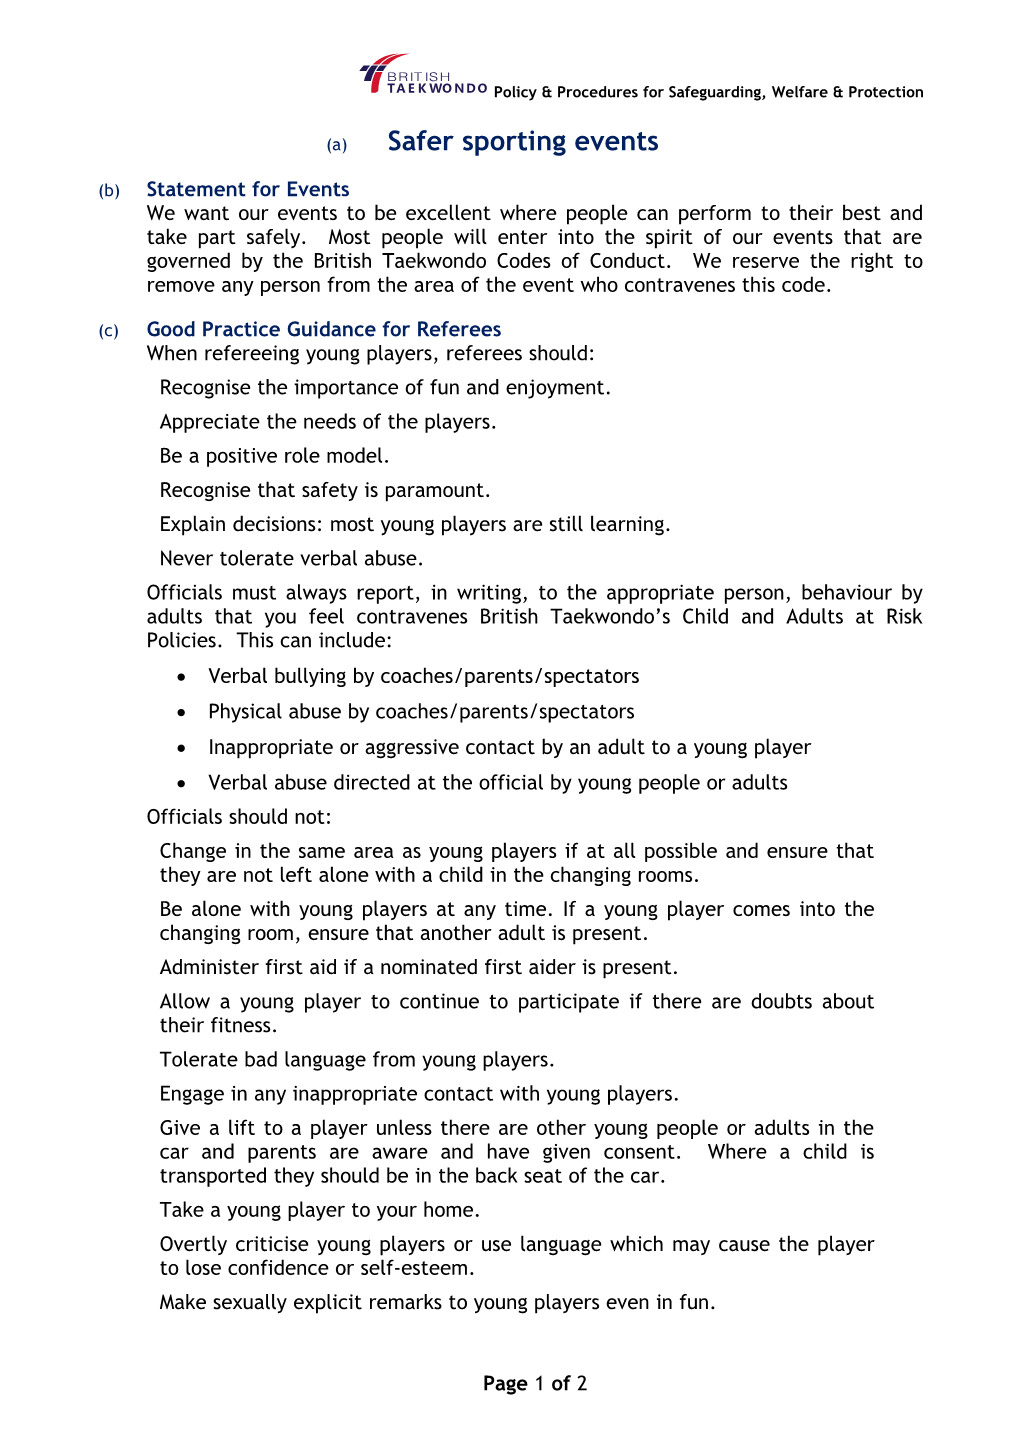 BTCB Policy & Procedures Manual 2005 s1